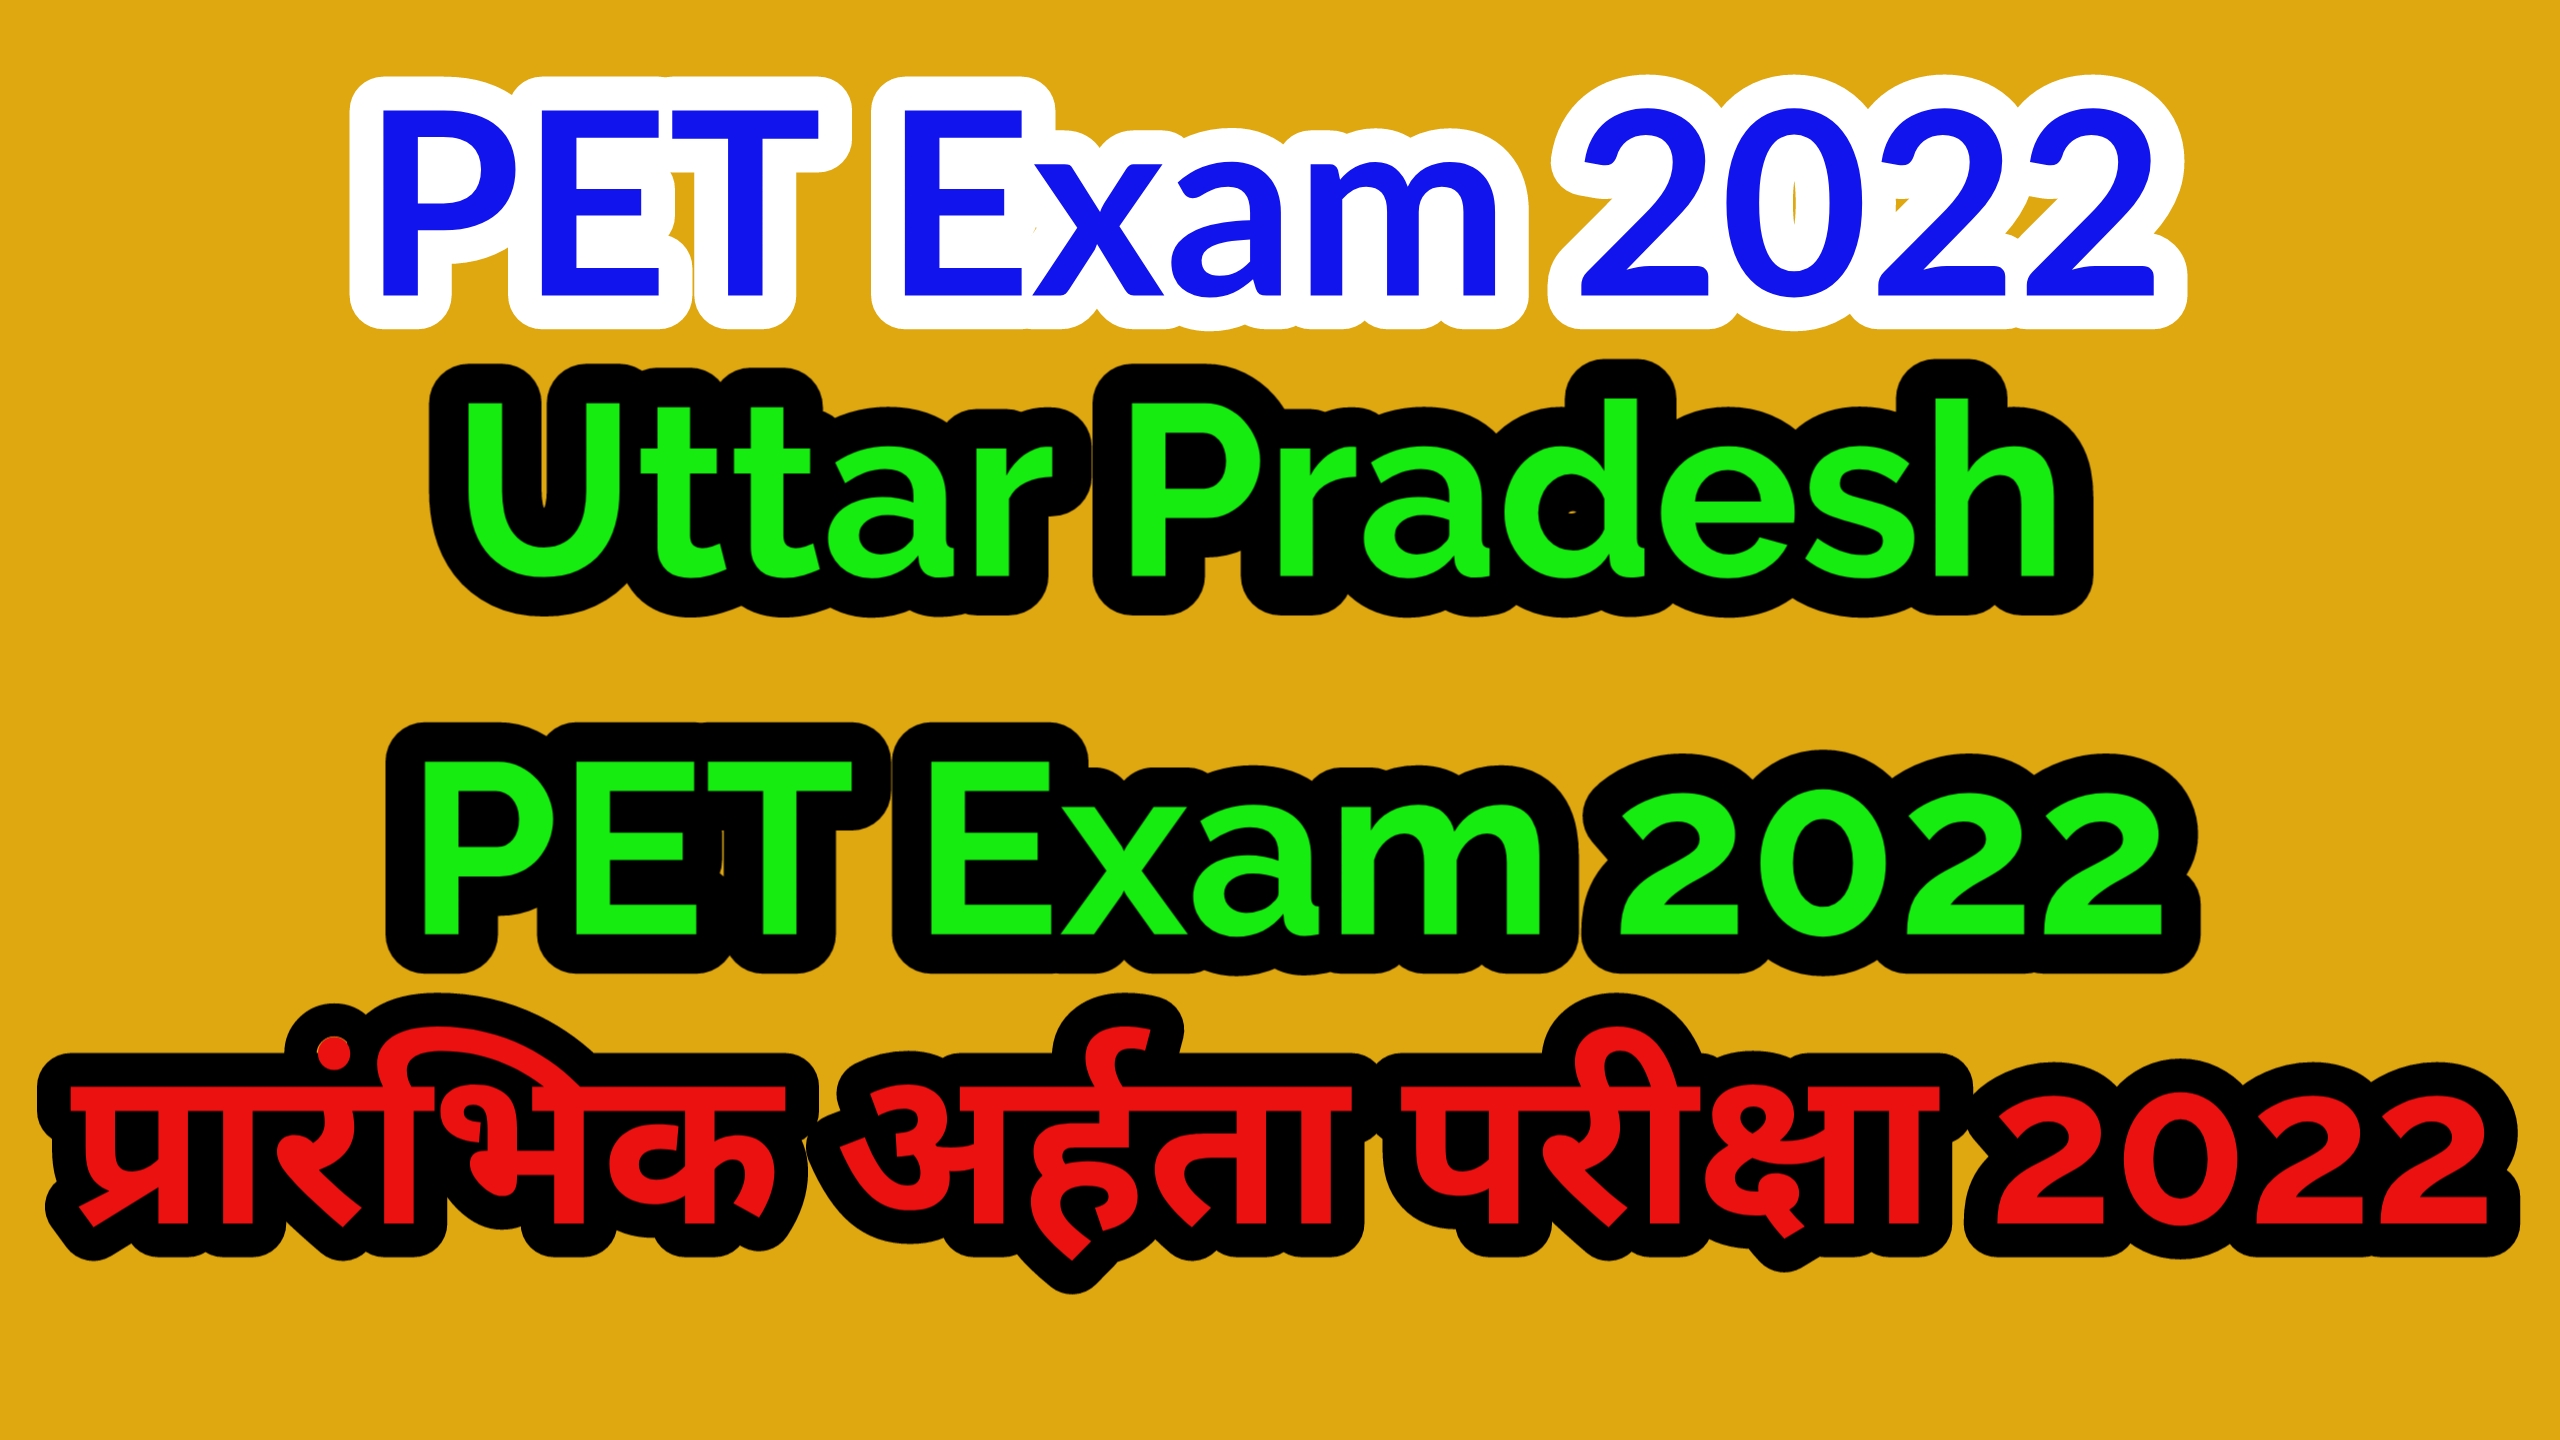 Uttar Pradesh PET Exam 2022